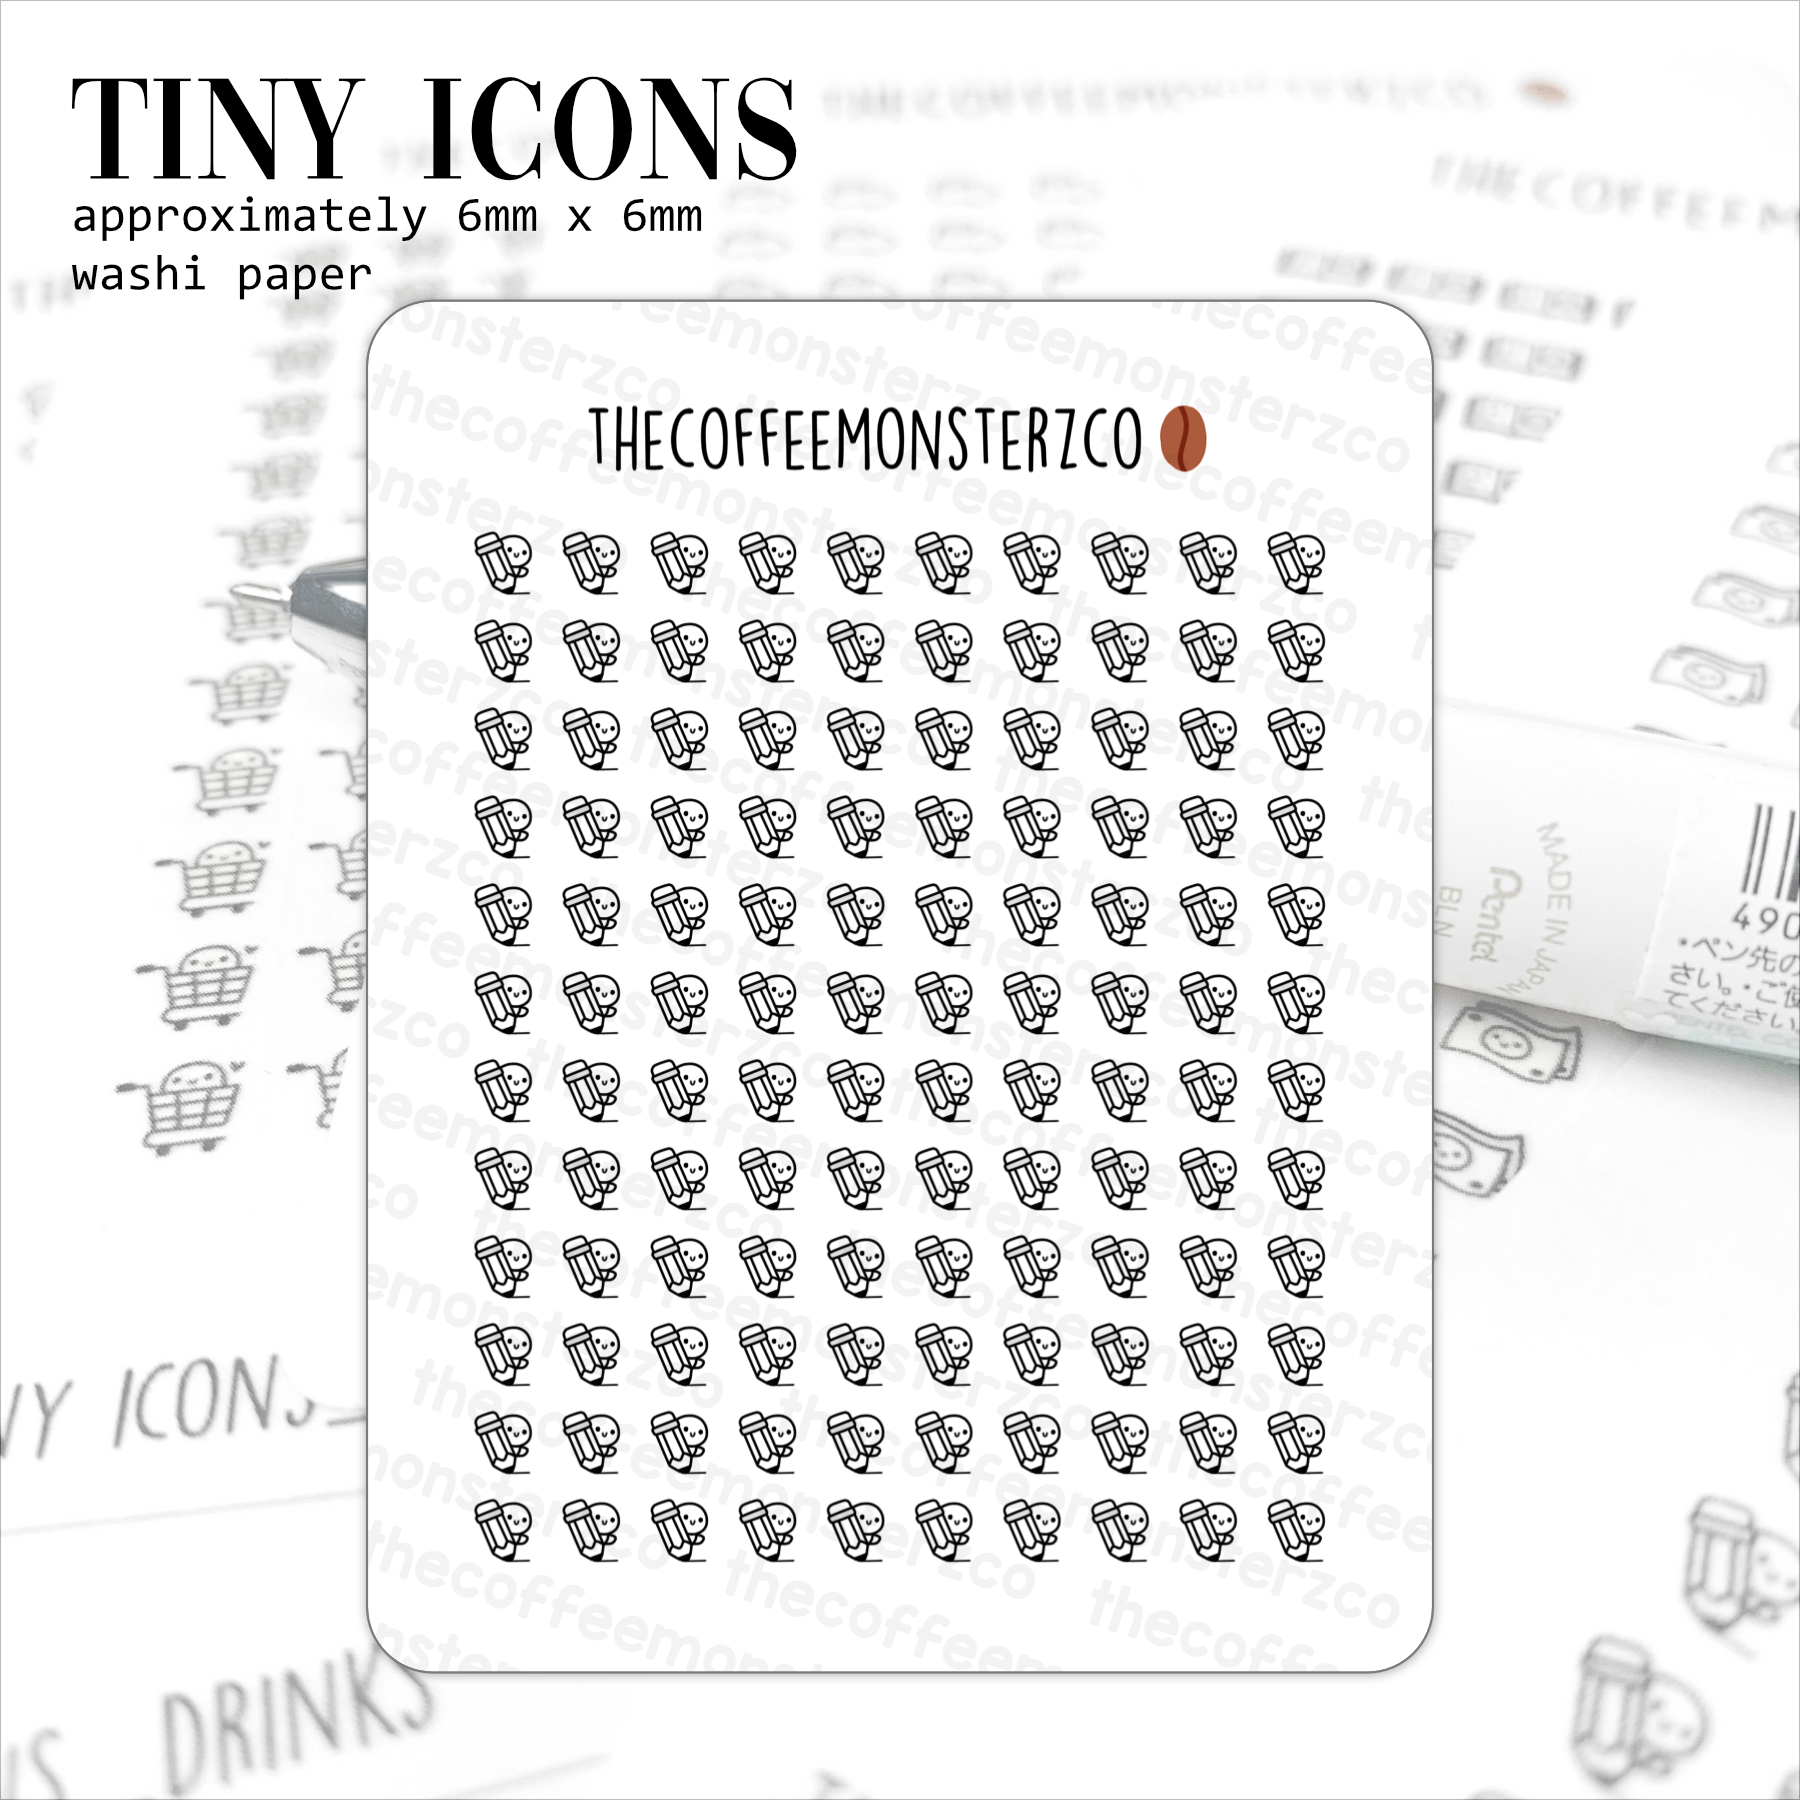 Tiny Icons (washi paper)